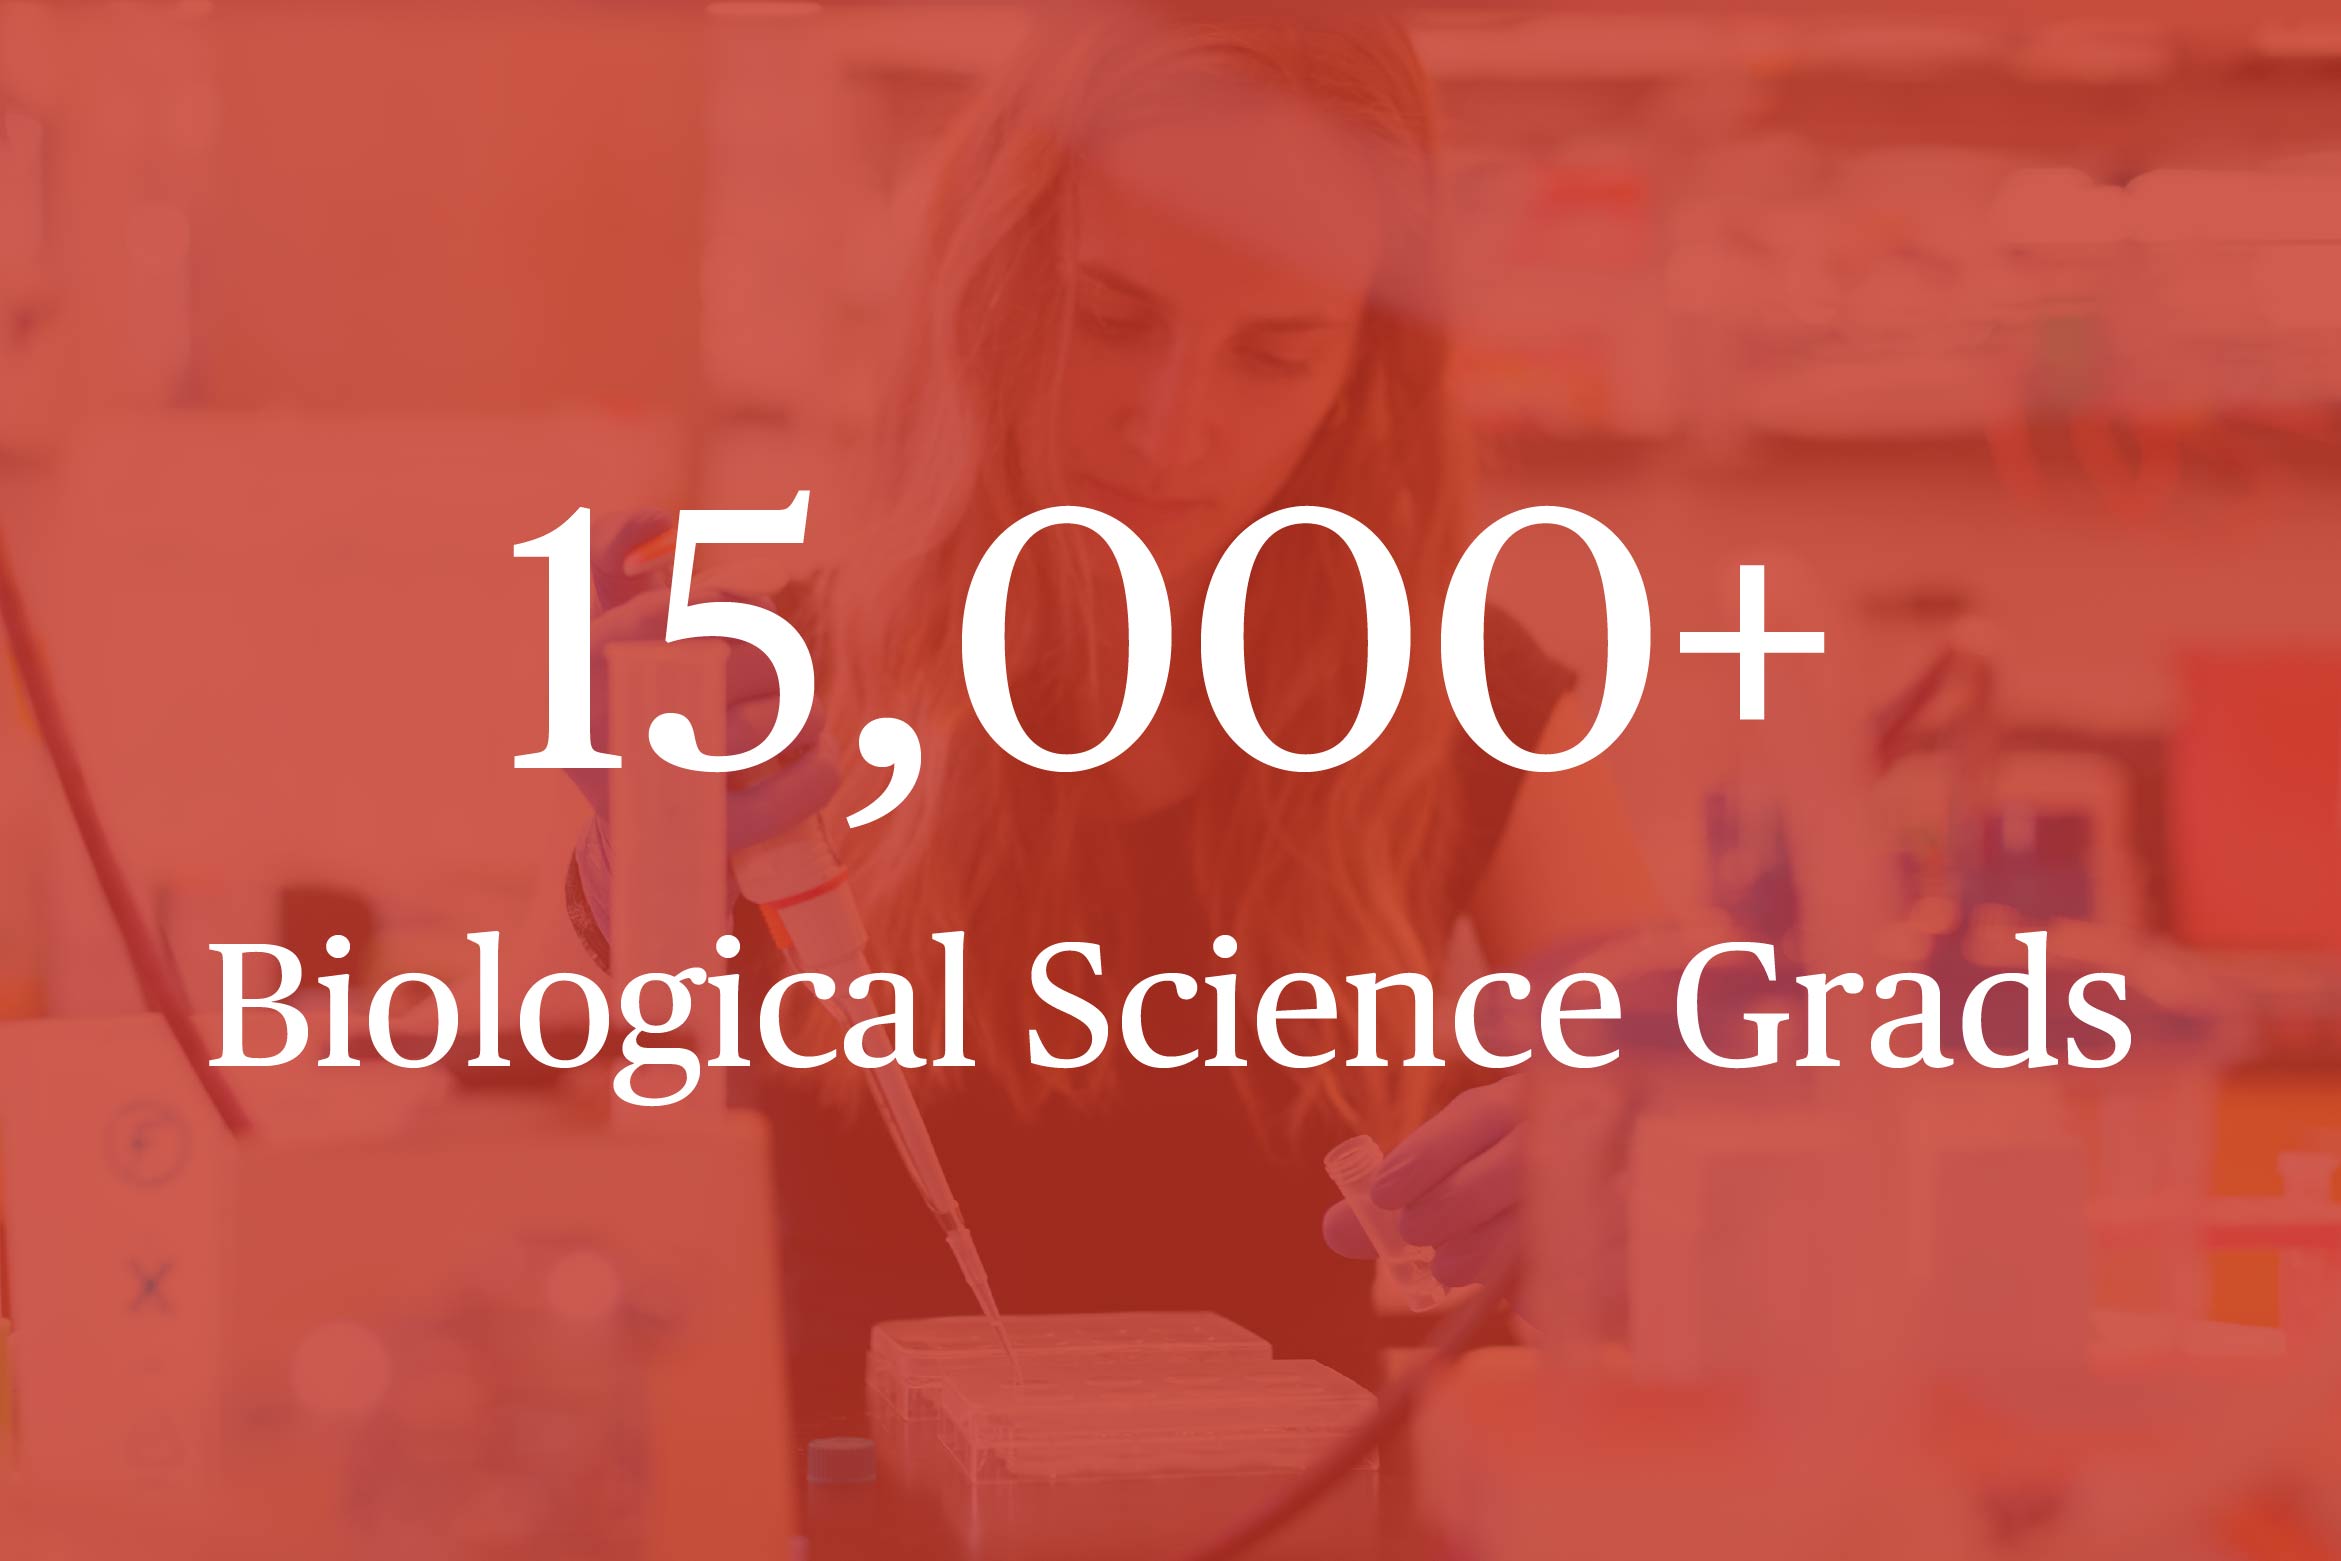 15,000 plus biological science grads